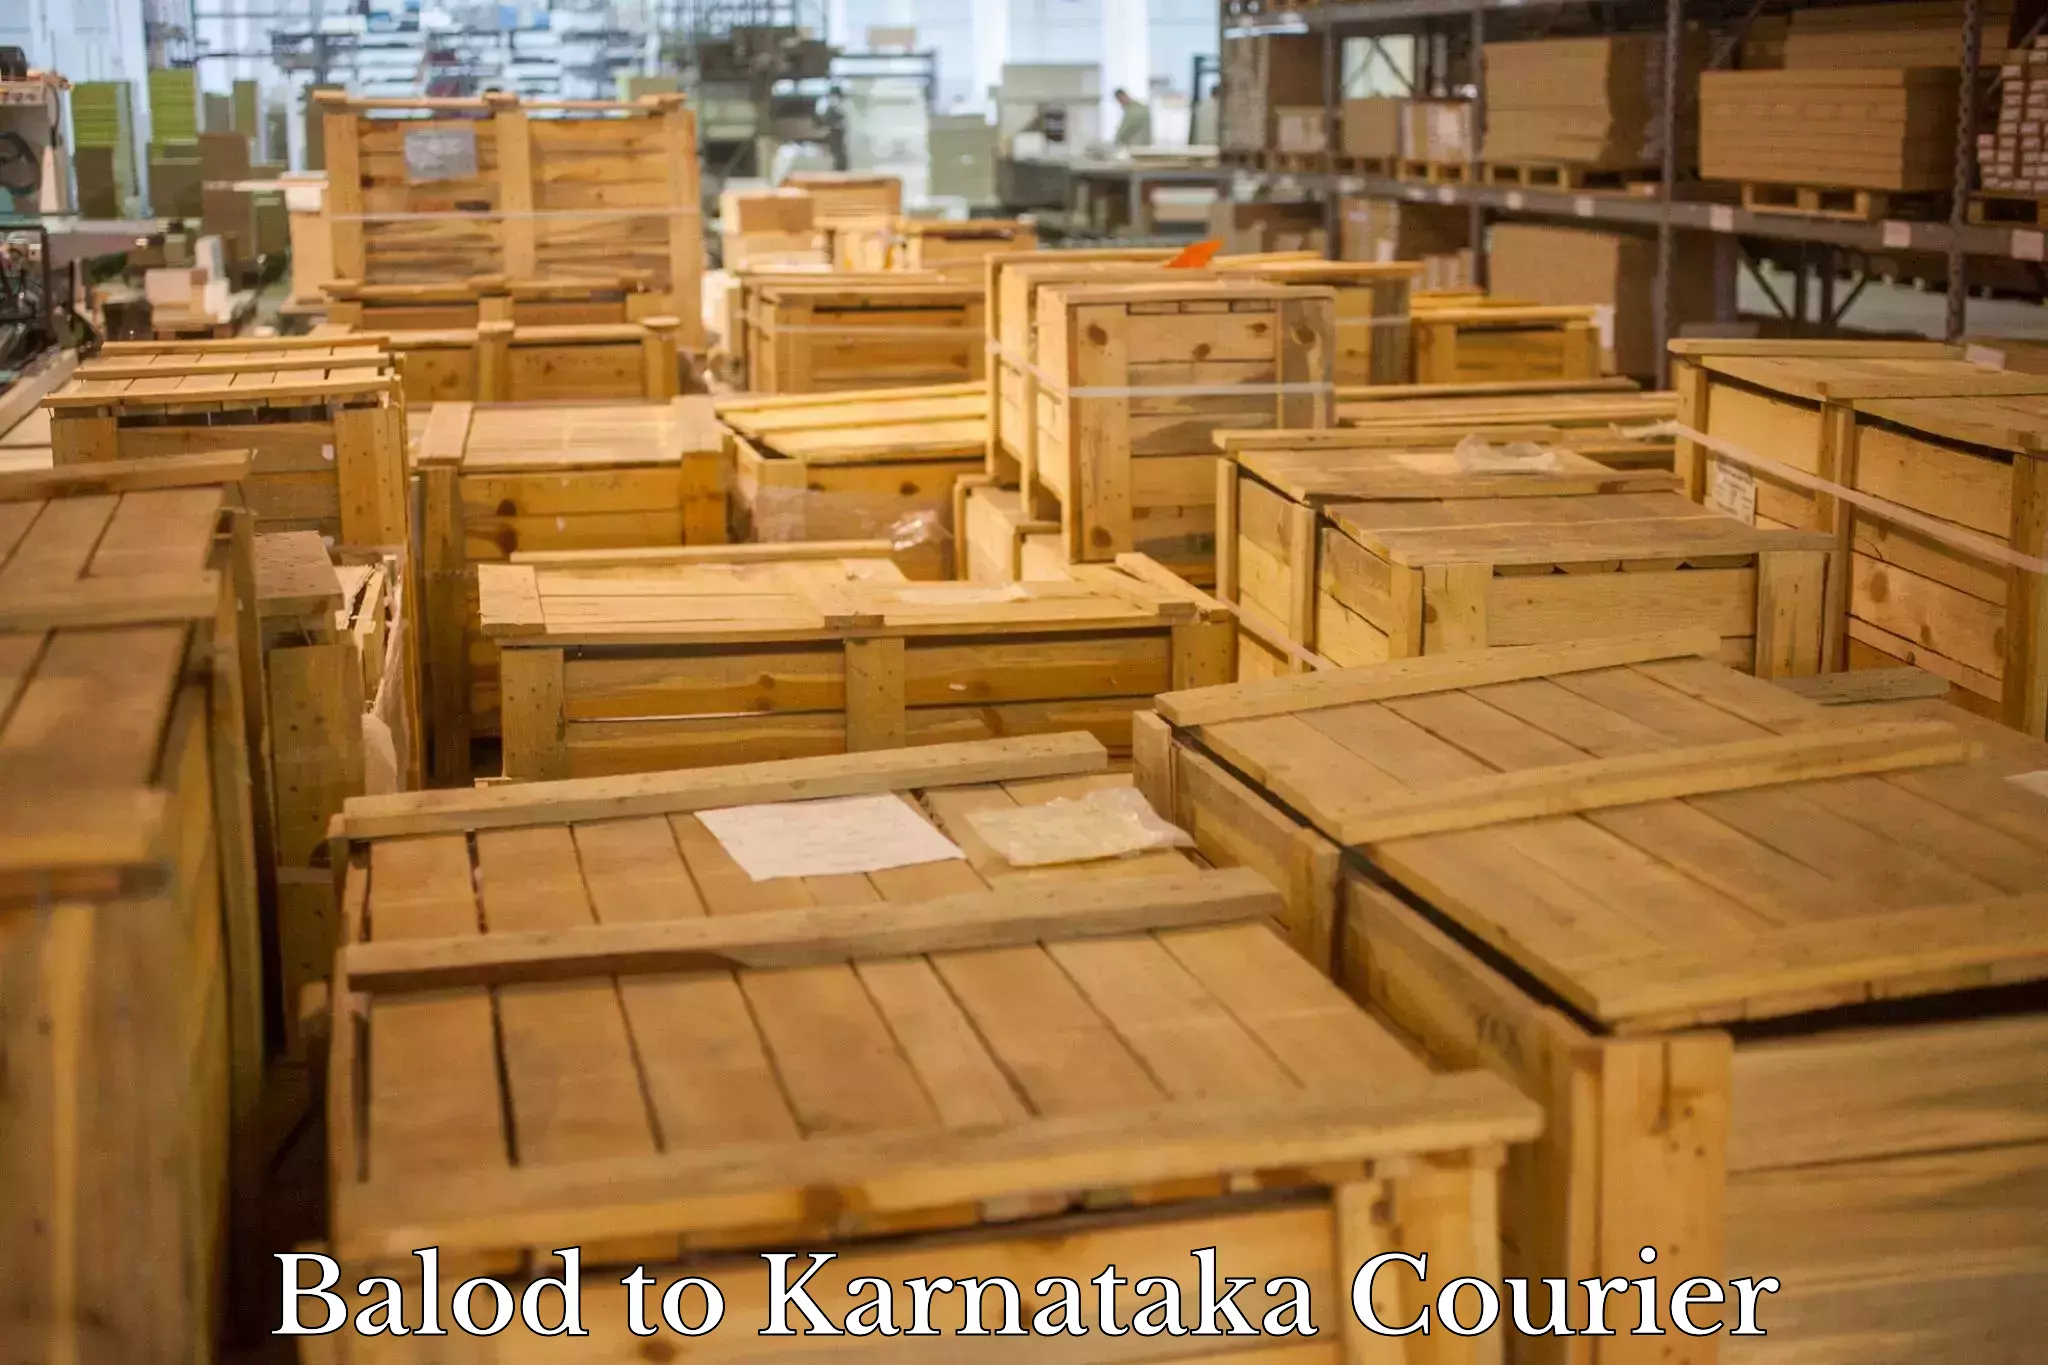 On-call courier service Balod to Karnataka